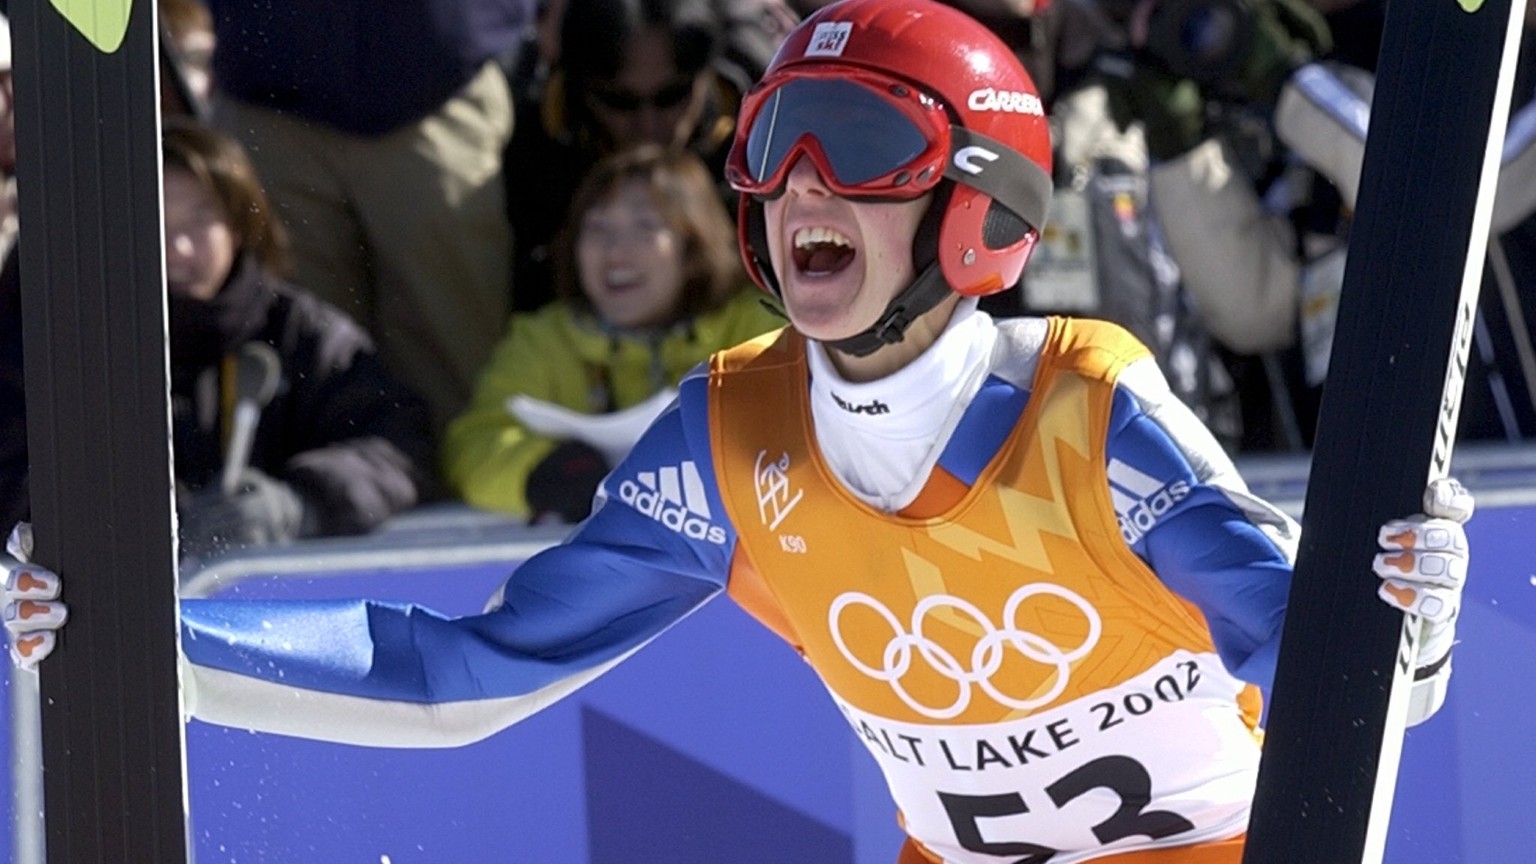 Simon Ammann of Switzerland celebrates his gold medal winning jump after the K90 Individual ski jump at the 2002 Salt Lake City Winter Olympics in Park City, Utah, Sunday, Feb. 10, 2002. (KEYSTONE/Kar ...